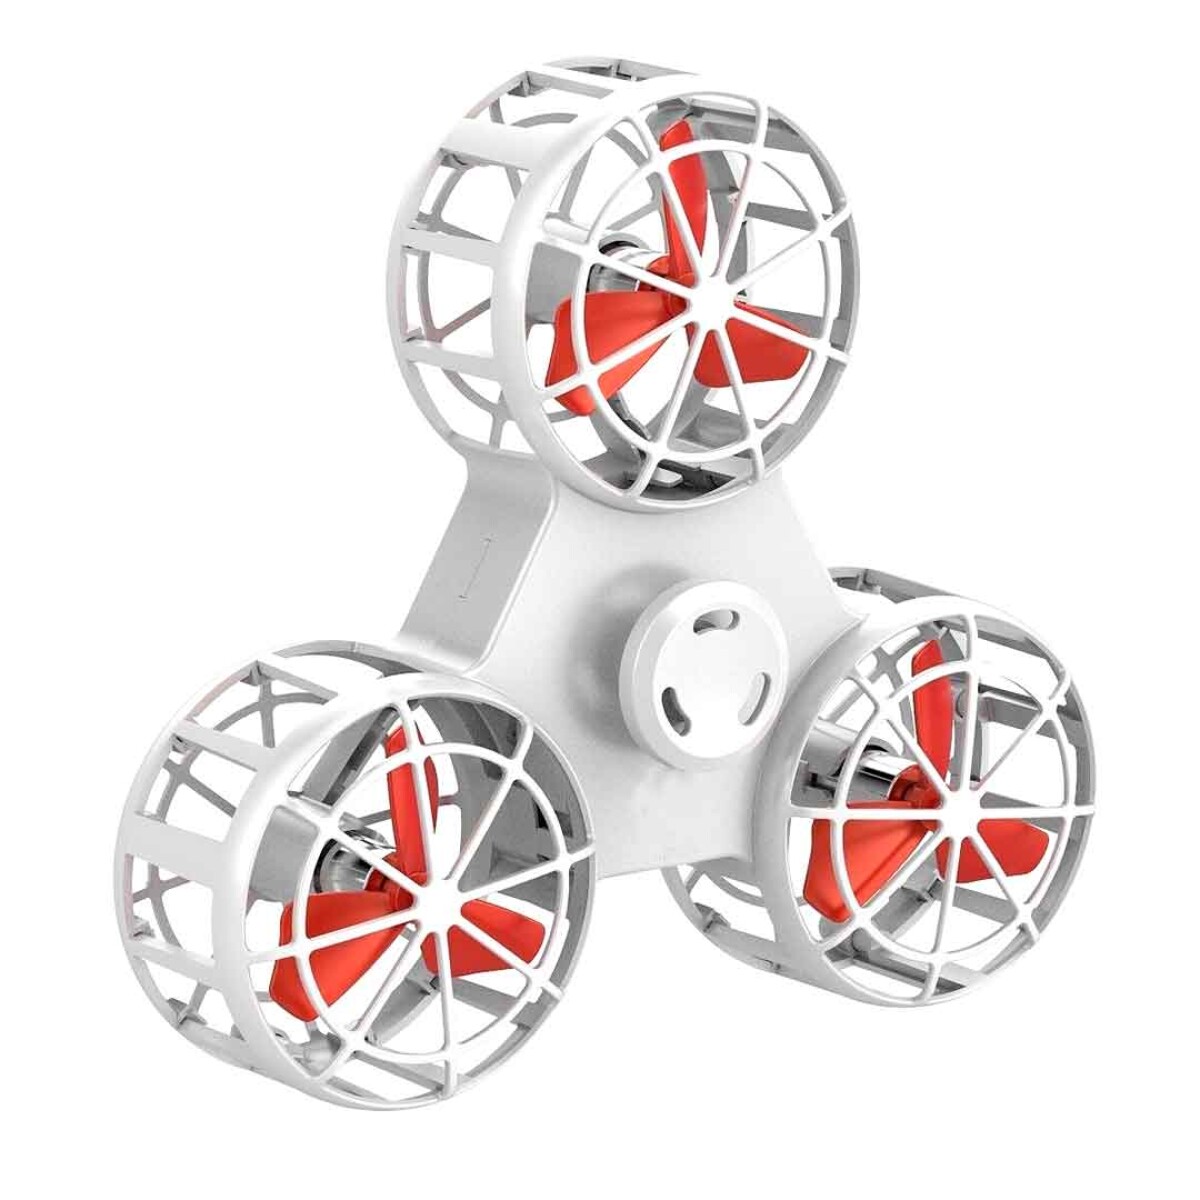 Mini Spinner Drone Hand Flying USB con luz led - 001 